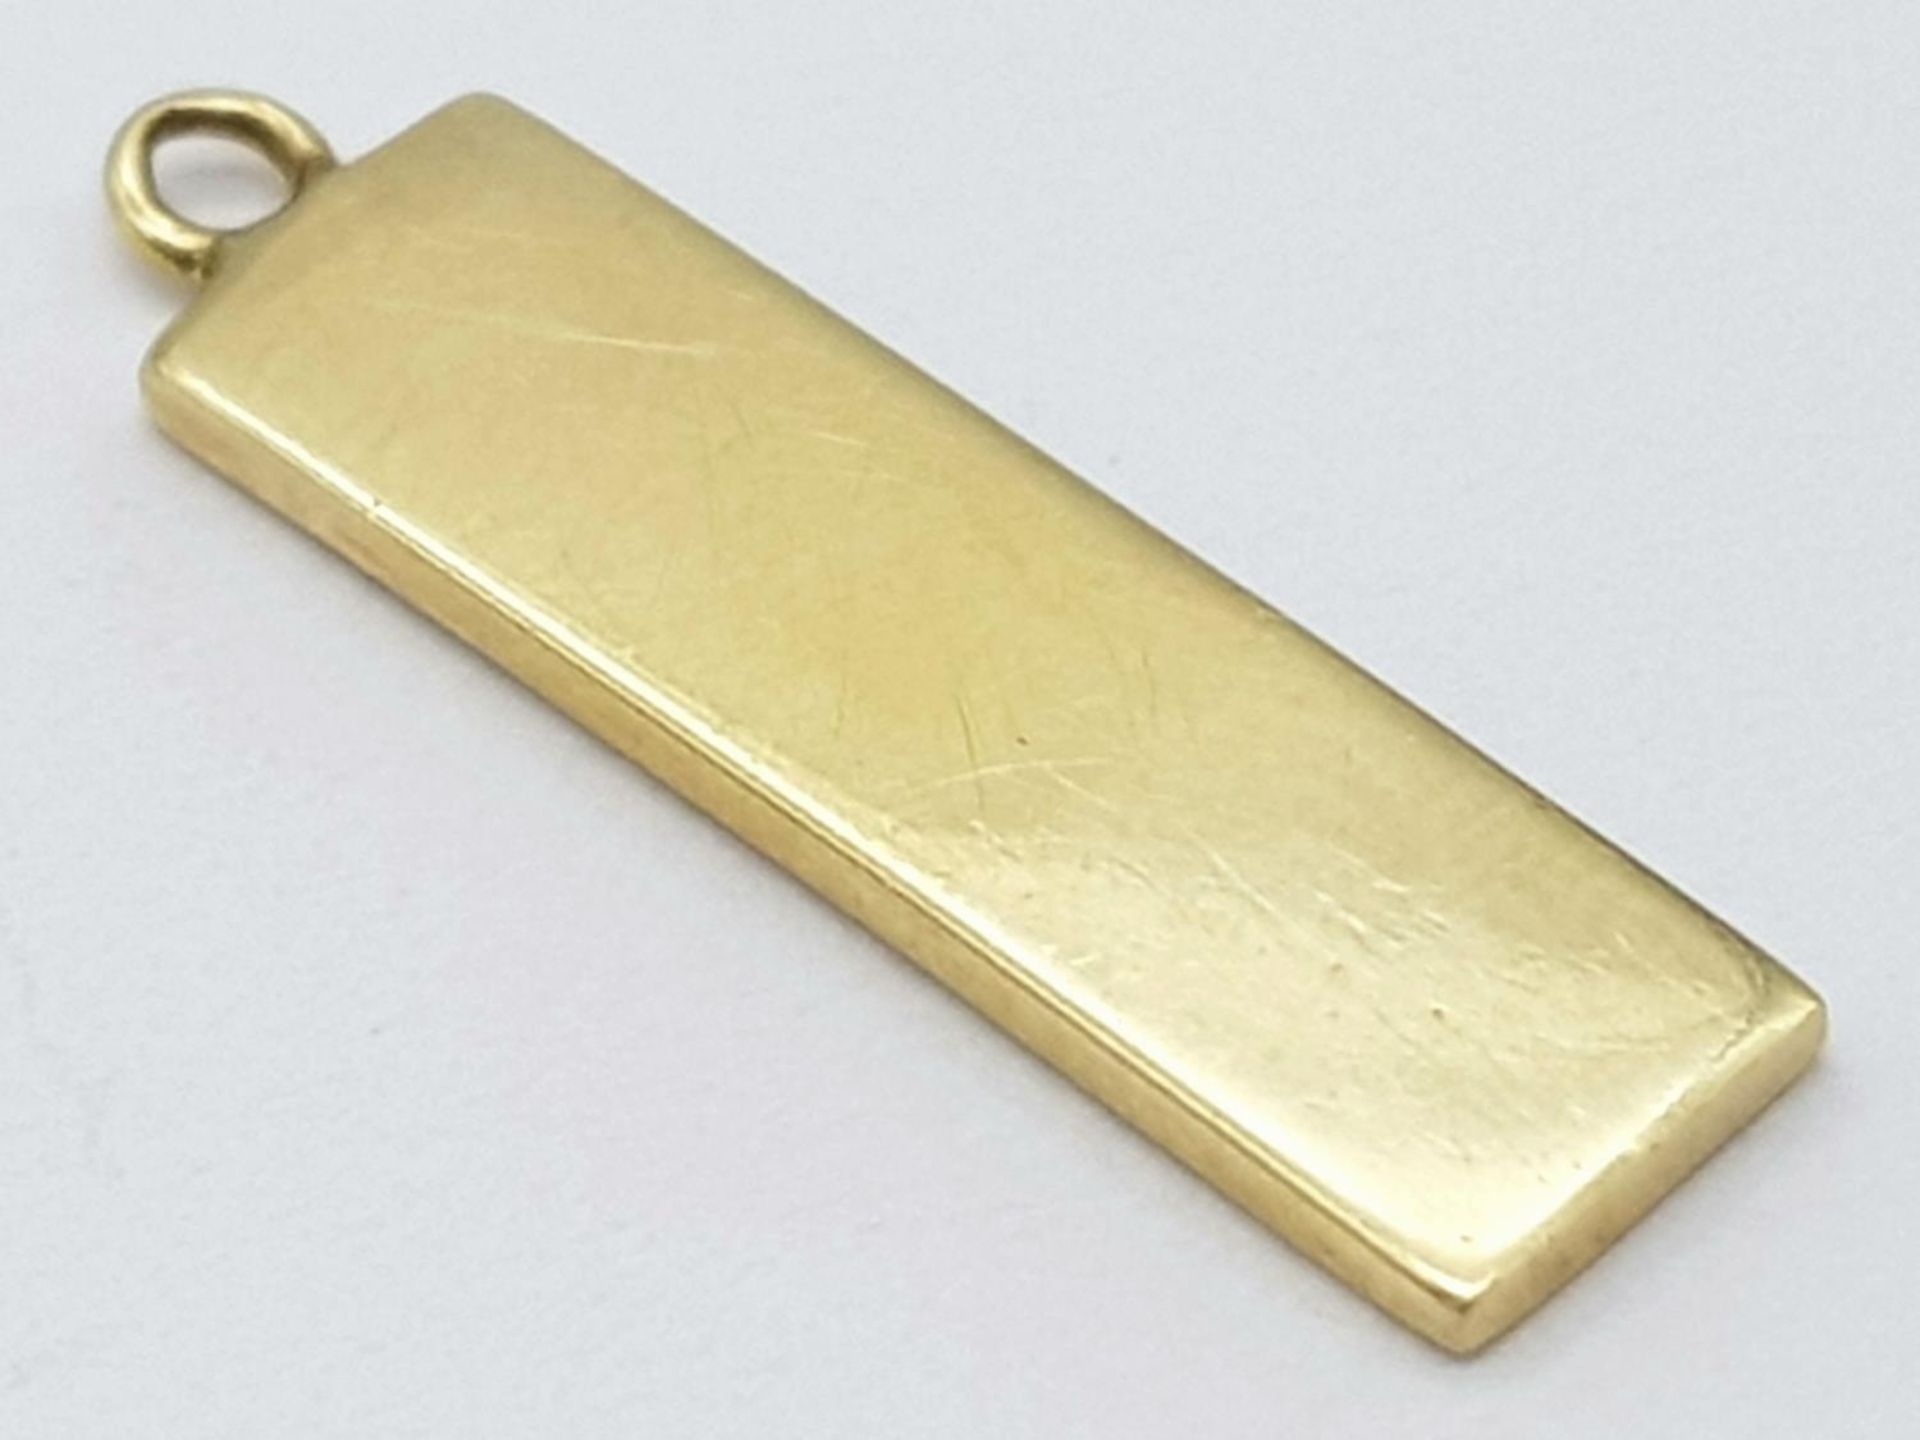 A 9K YELLOW GOLD INGOT PENDANT 1.5G , 21mm x 6mm. SC 9016 - Image 3 of 4